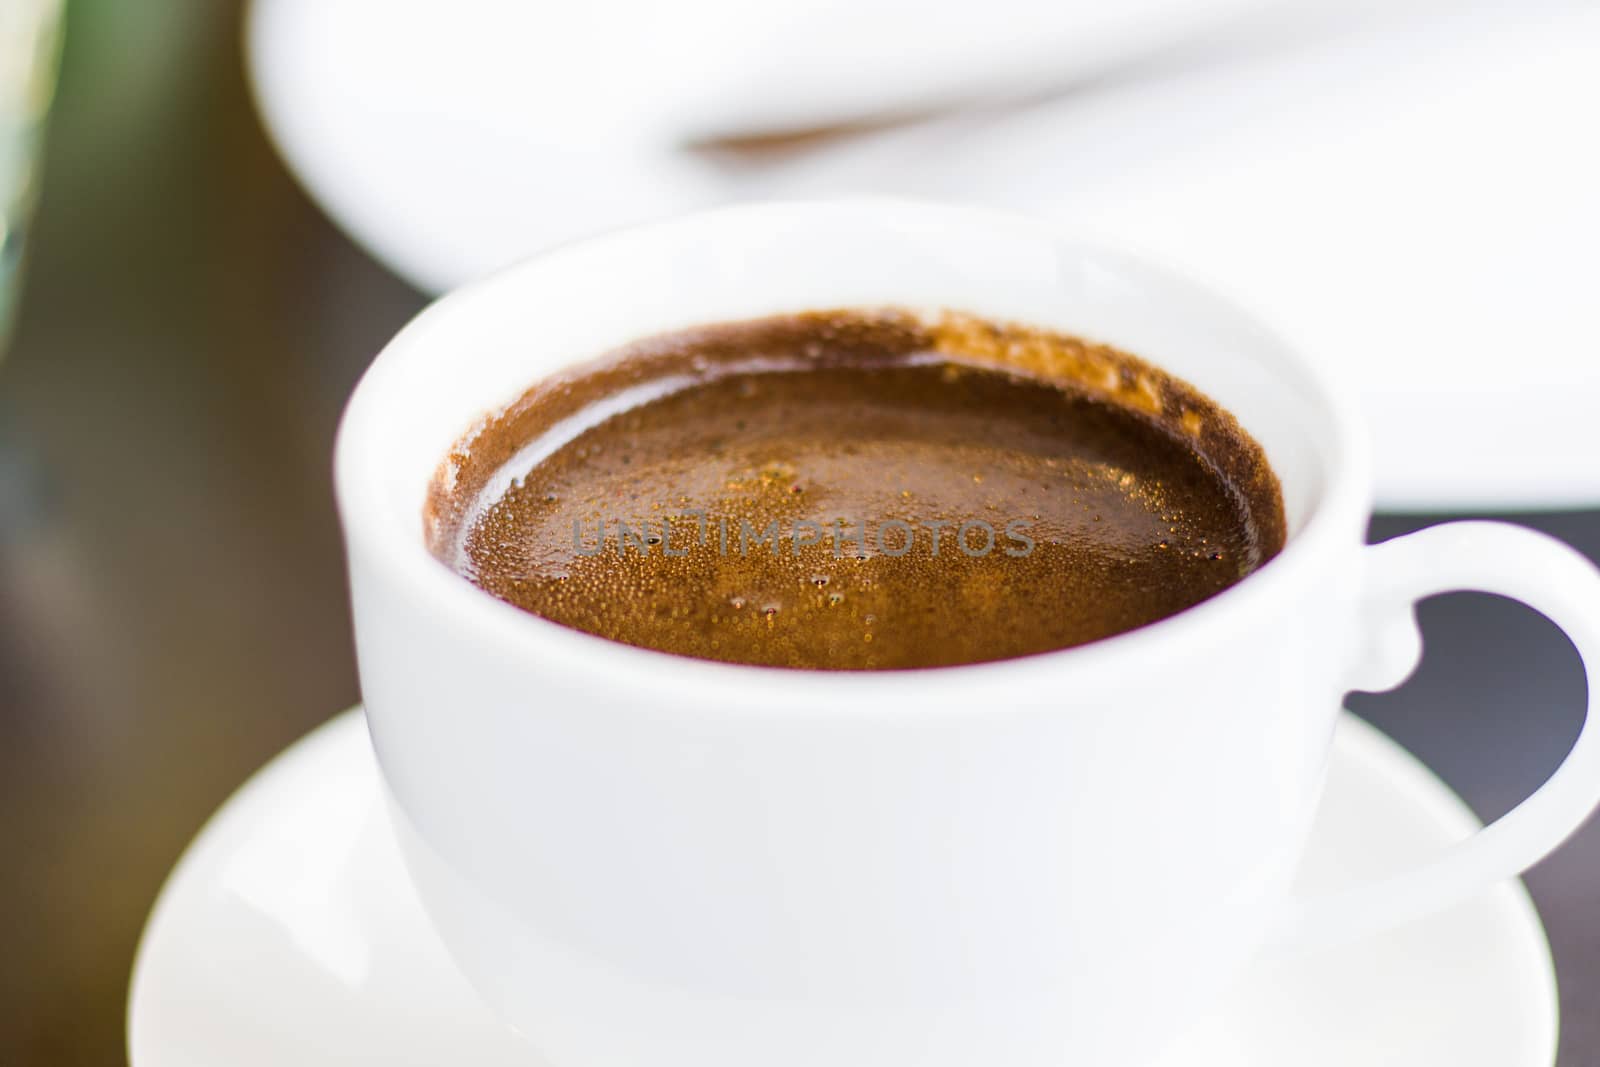 Turkish cup pf coffee, dark coffee close-up and macro, hot aromatic drink by Taidundua